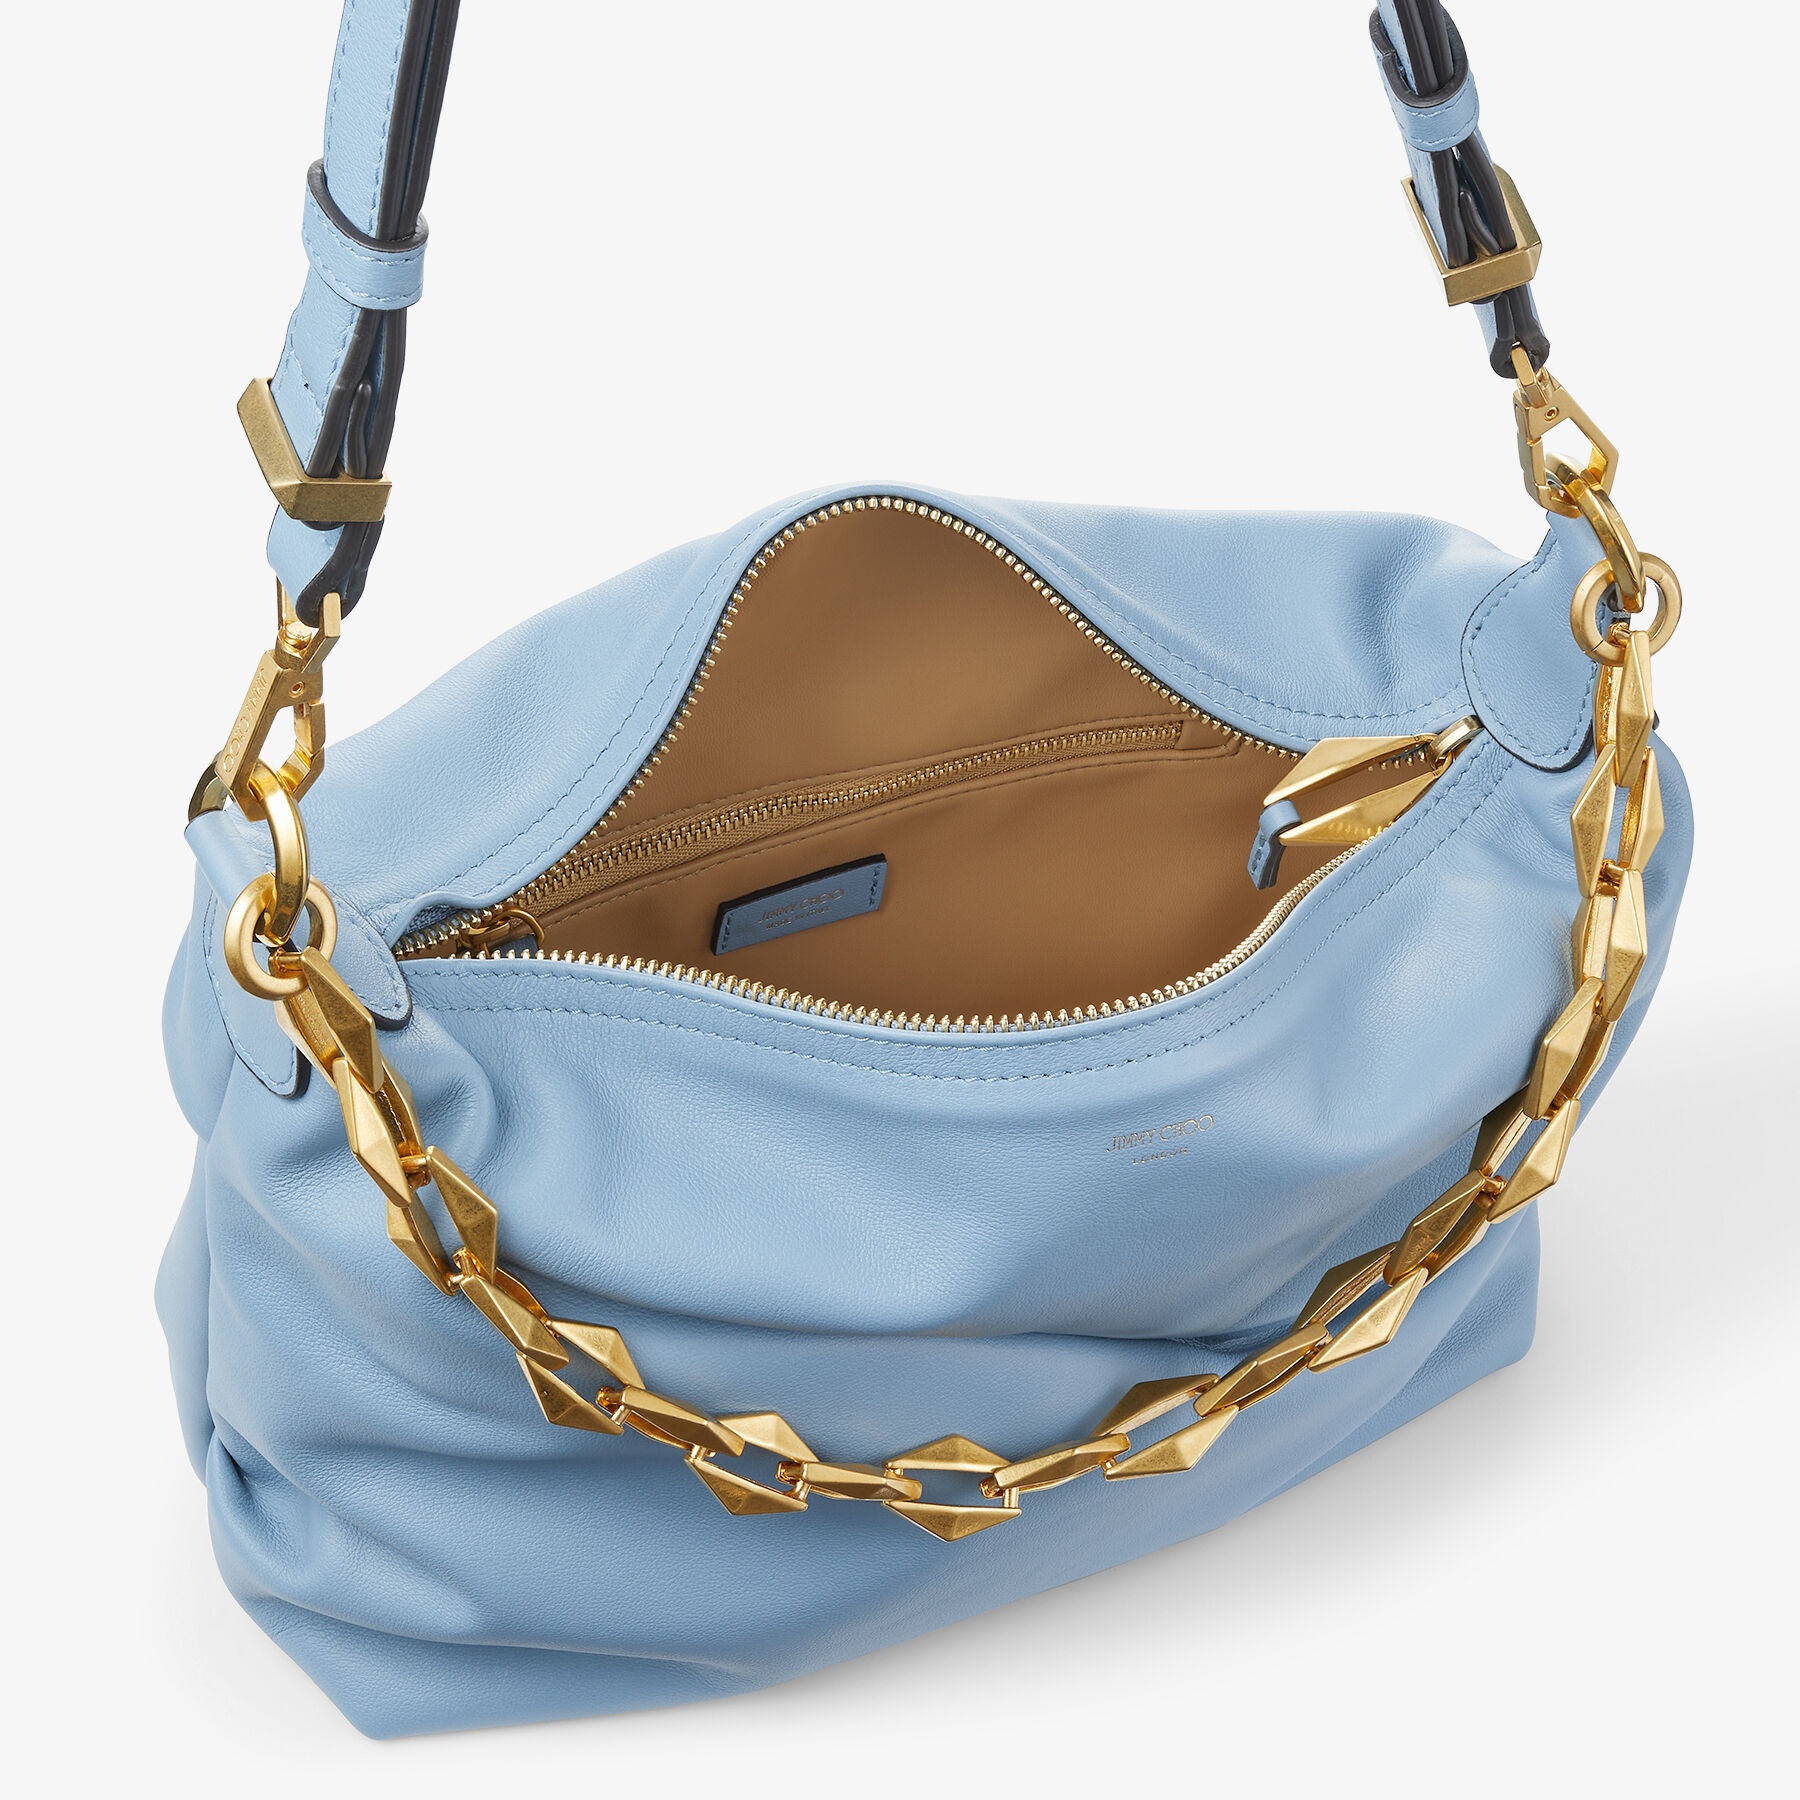 Diamond Soft Hobo S
Smoky Blue Soft Calf Leather Hobo Bag with Chain Strap - 7